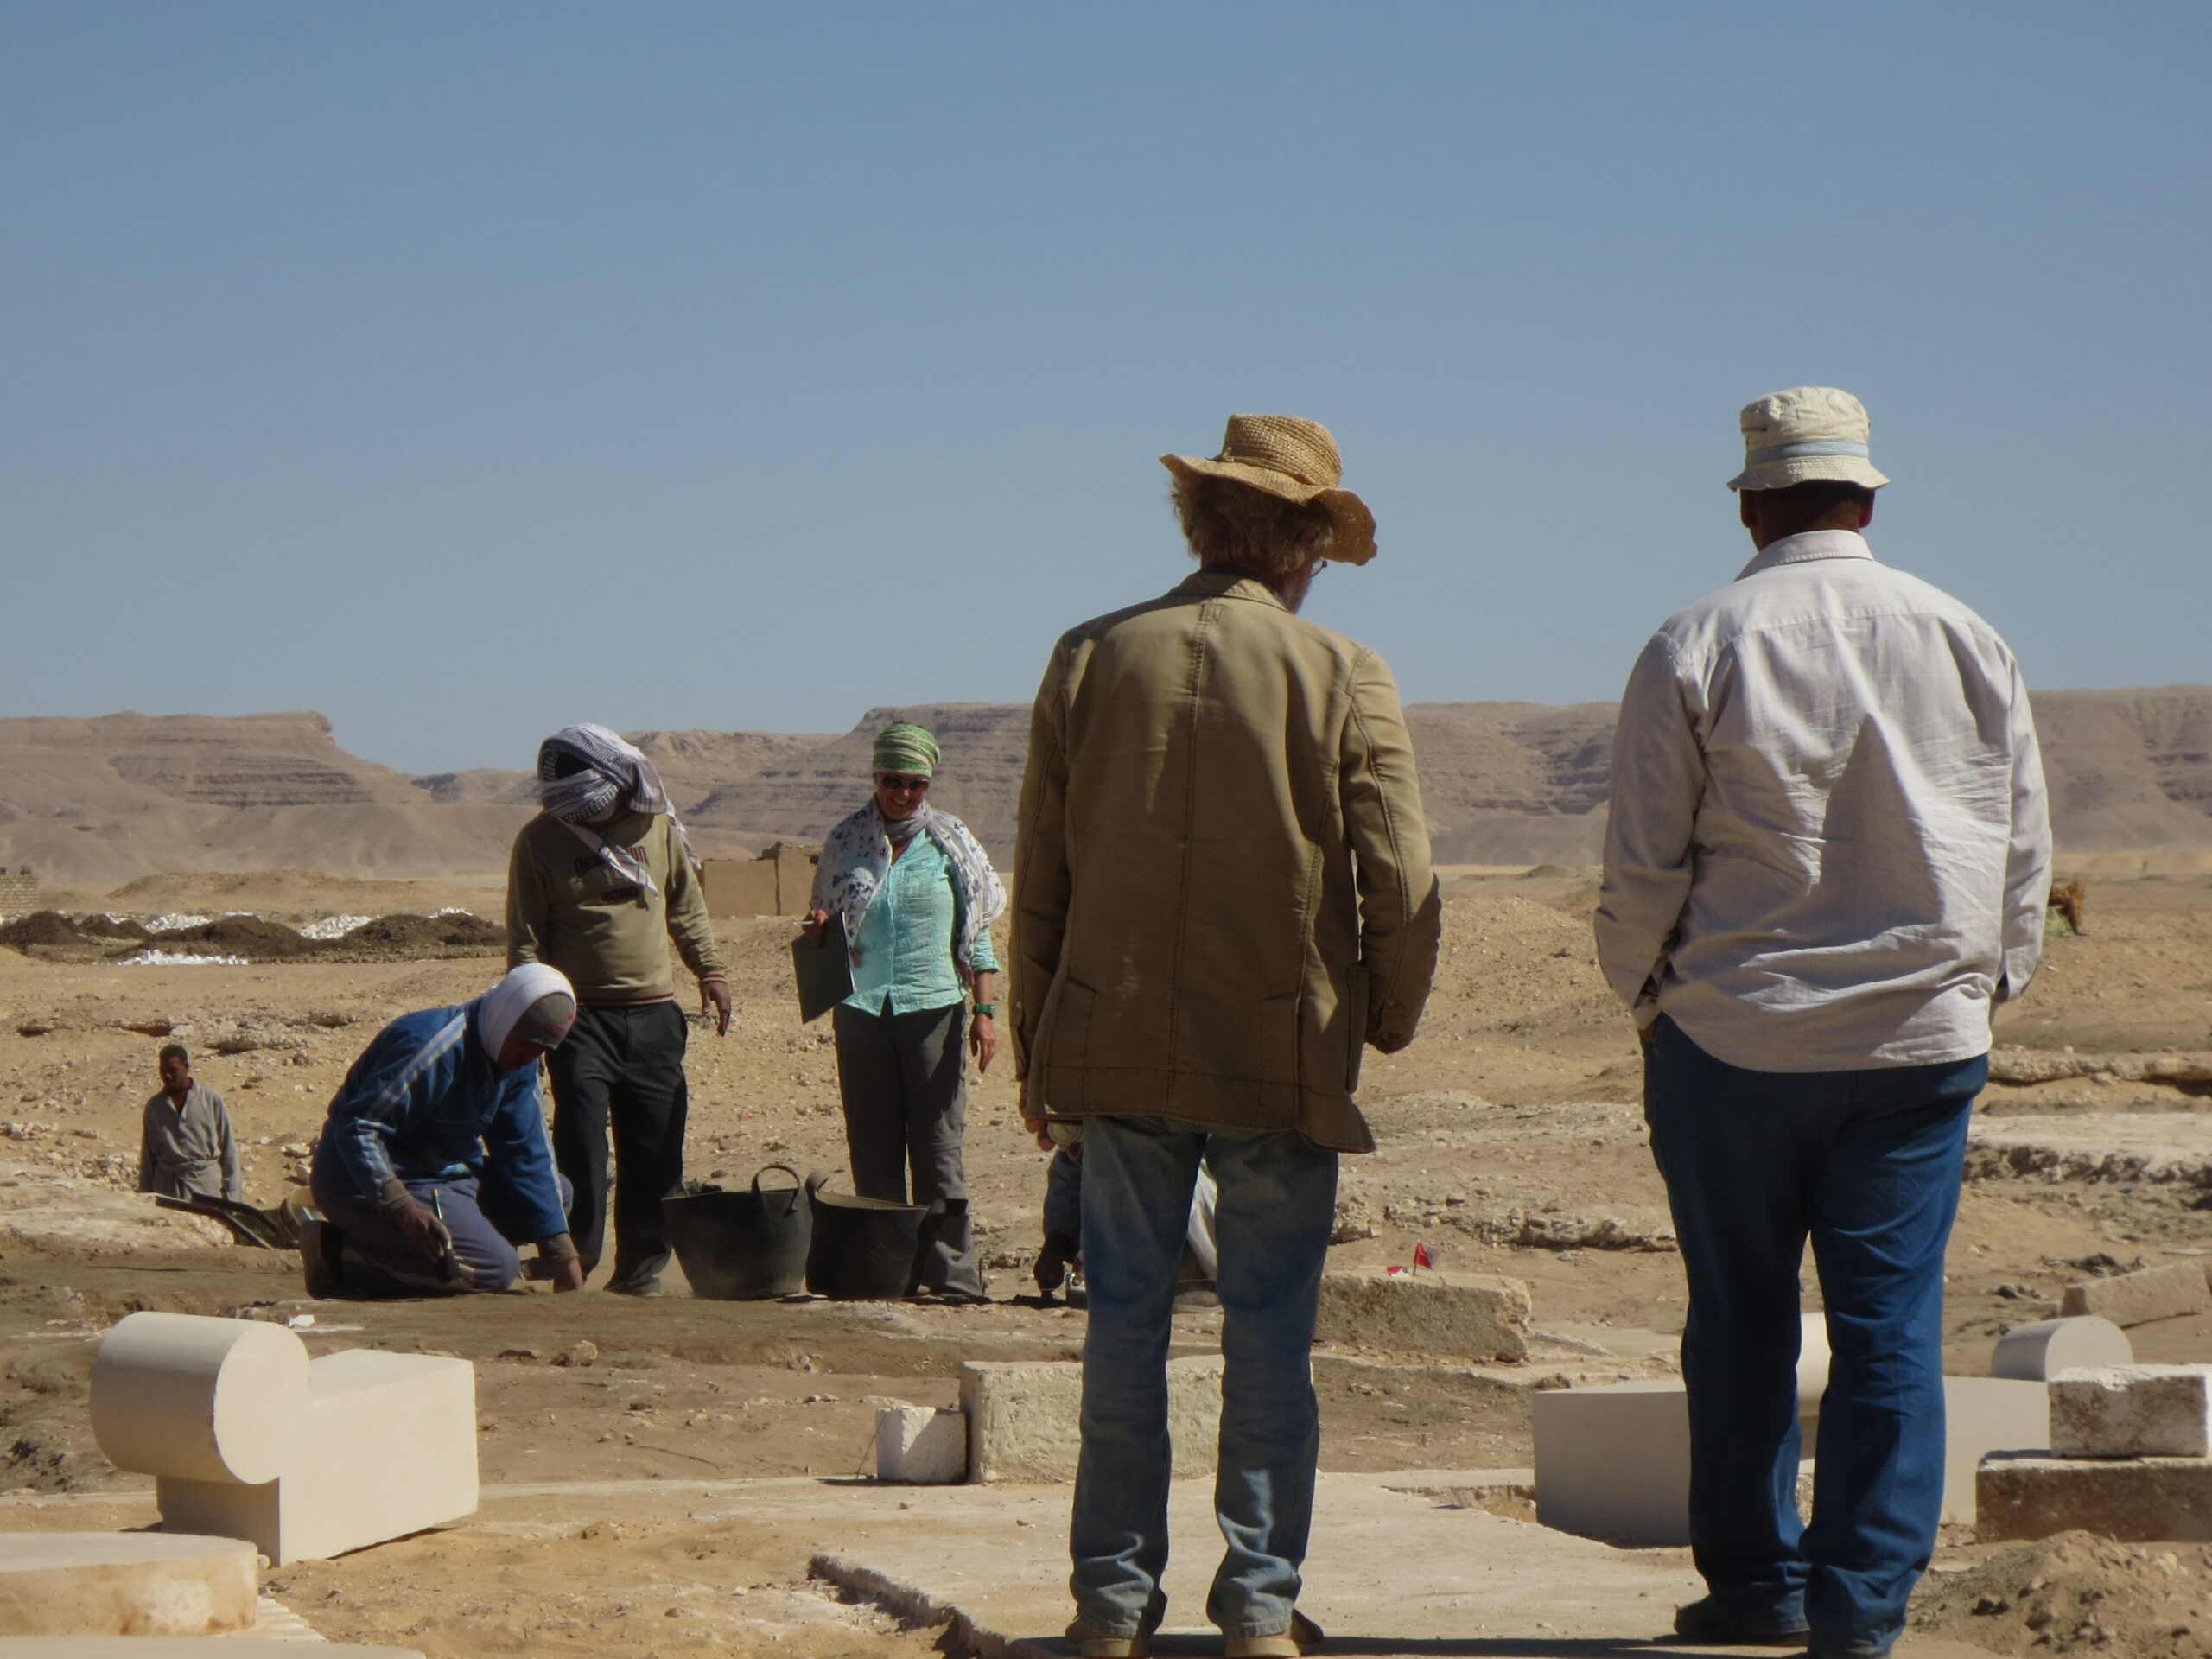 Barry Kemp and team surveys the site. 2013